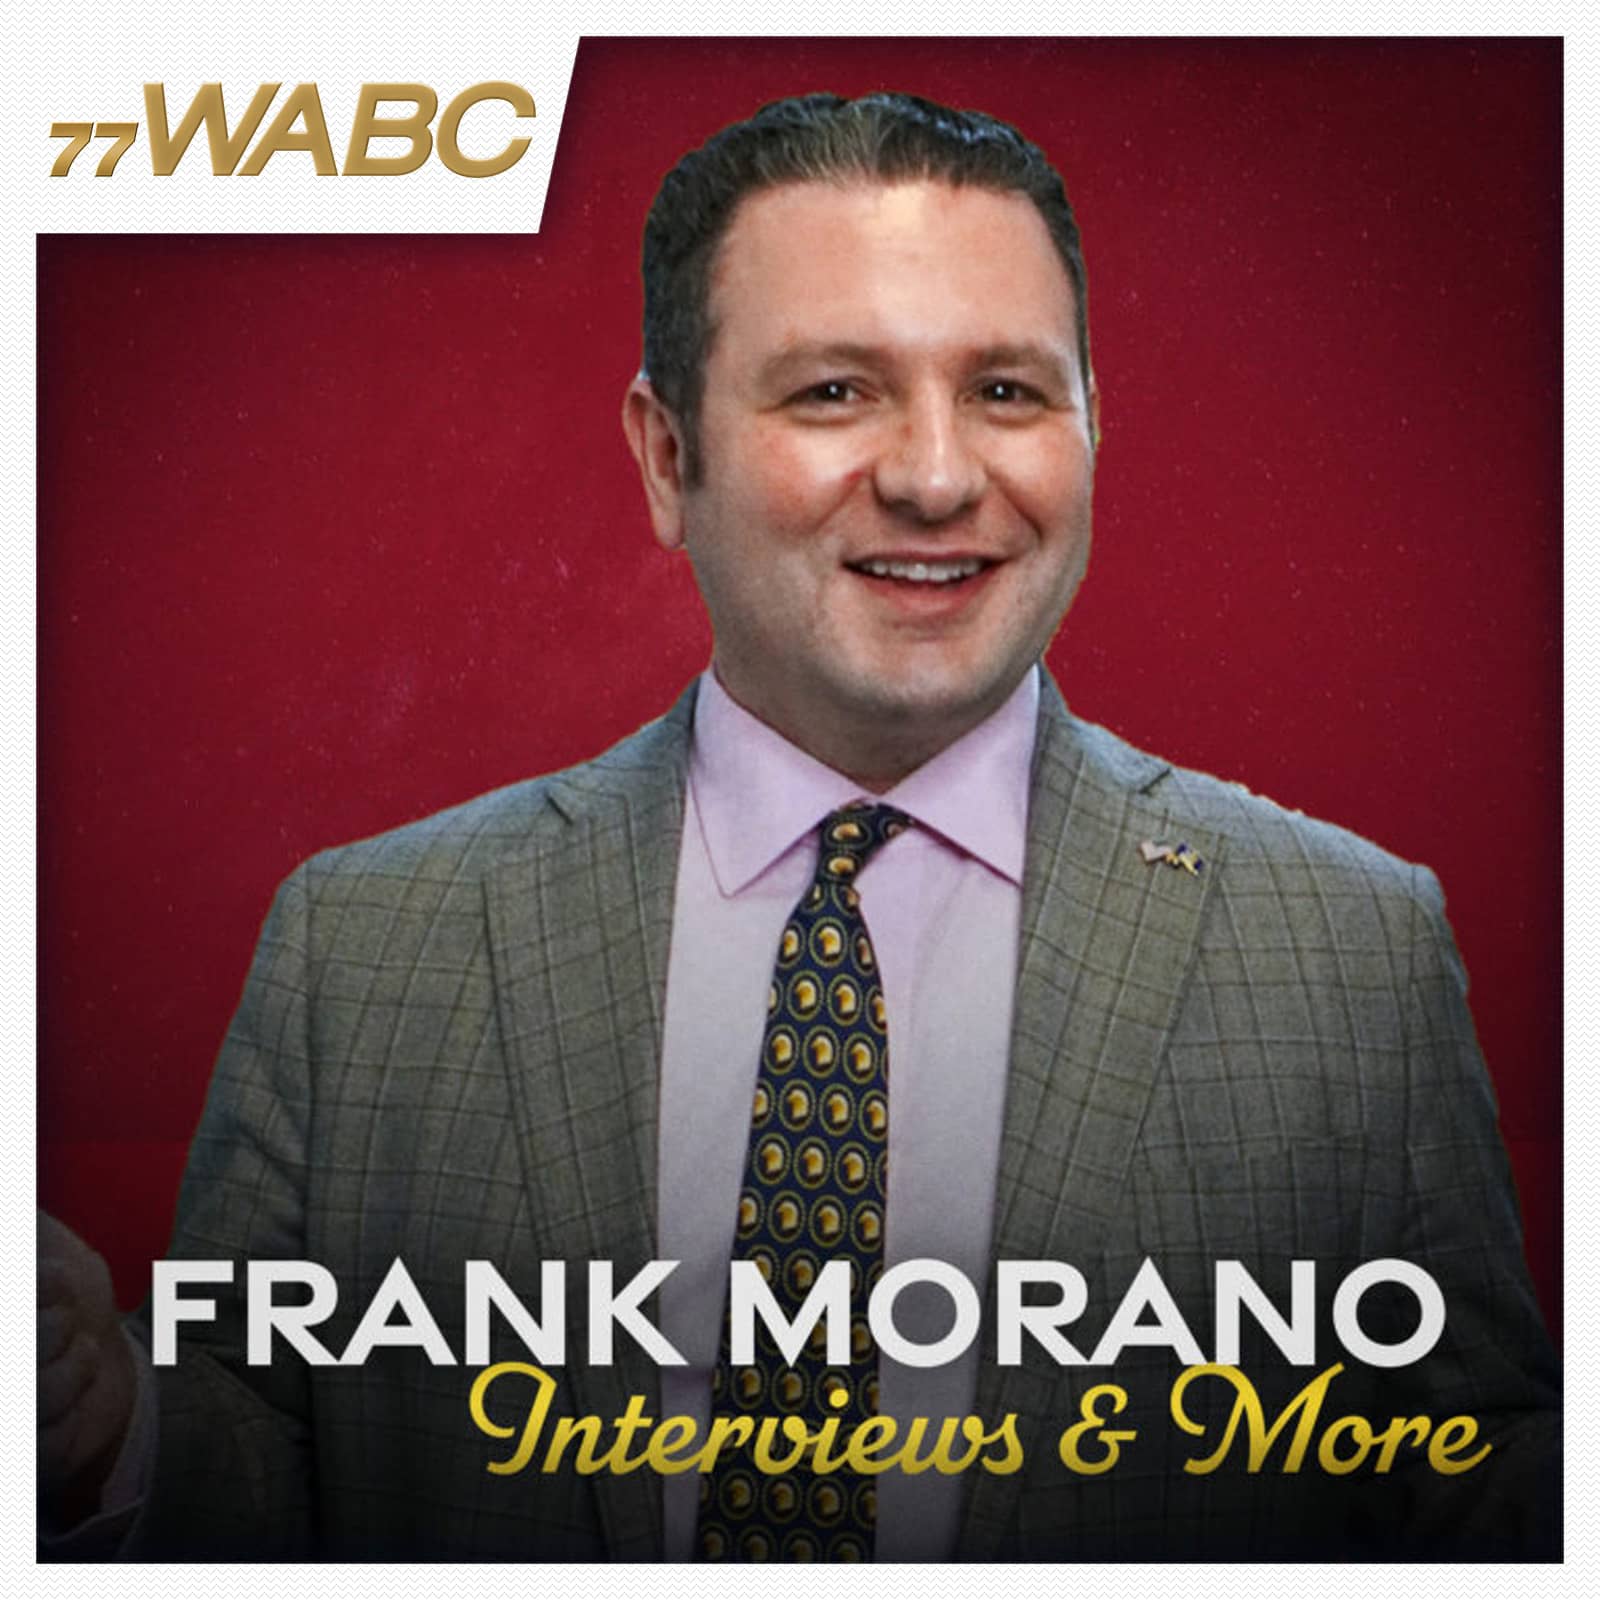 frank-morano-interviews-and-more-podcast-new-logo-10